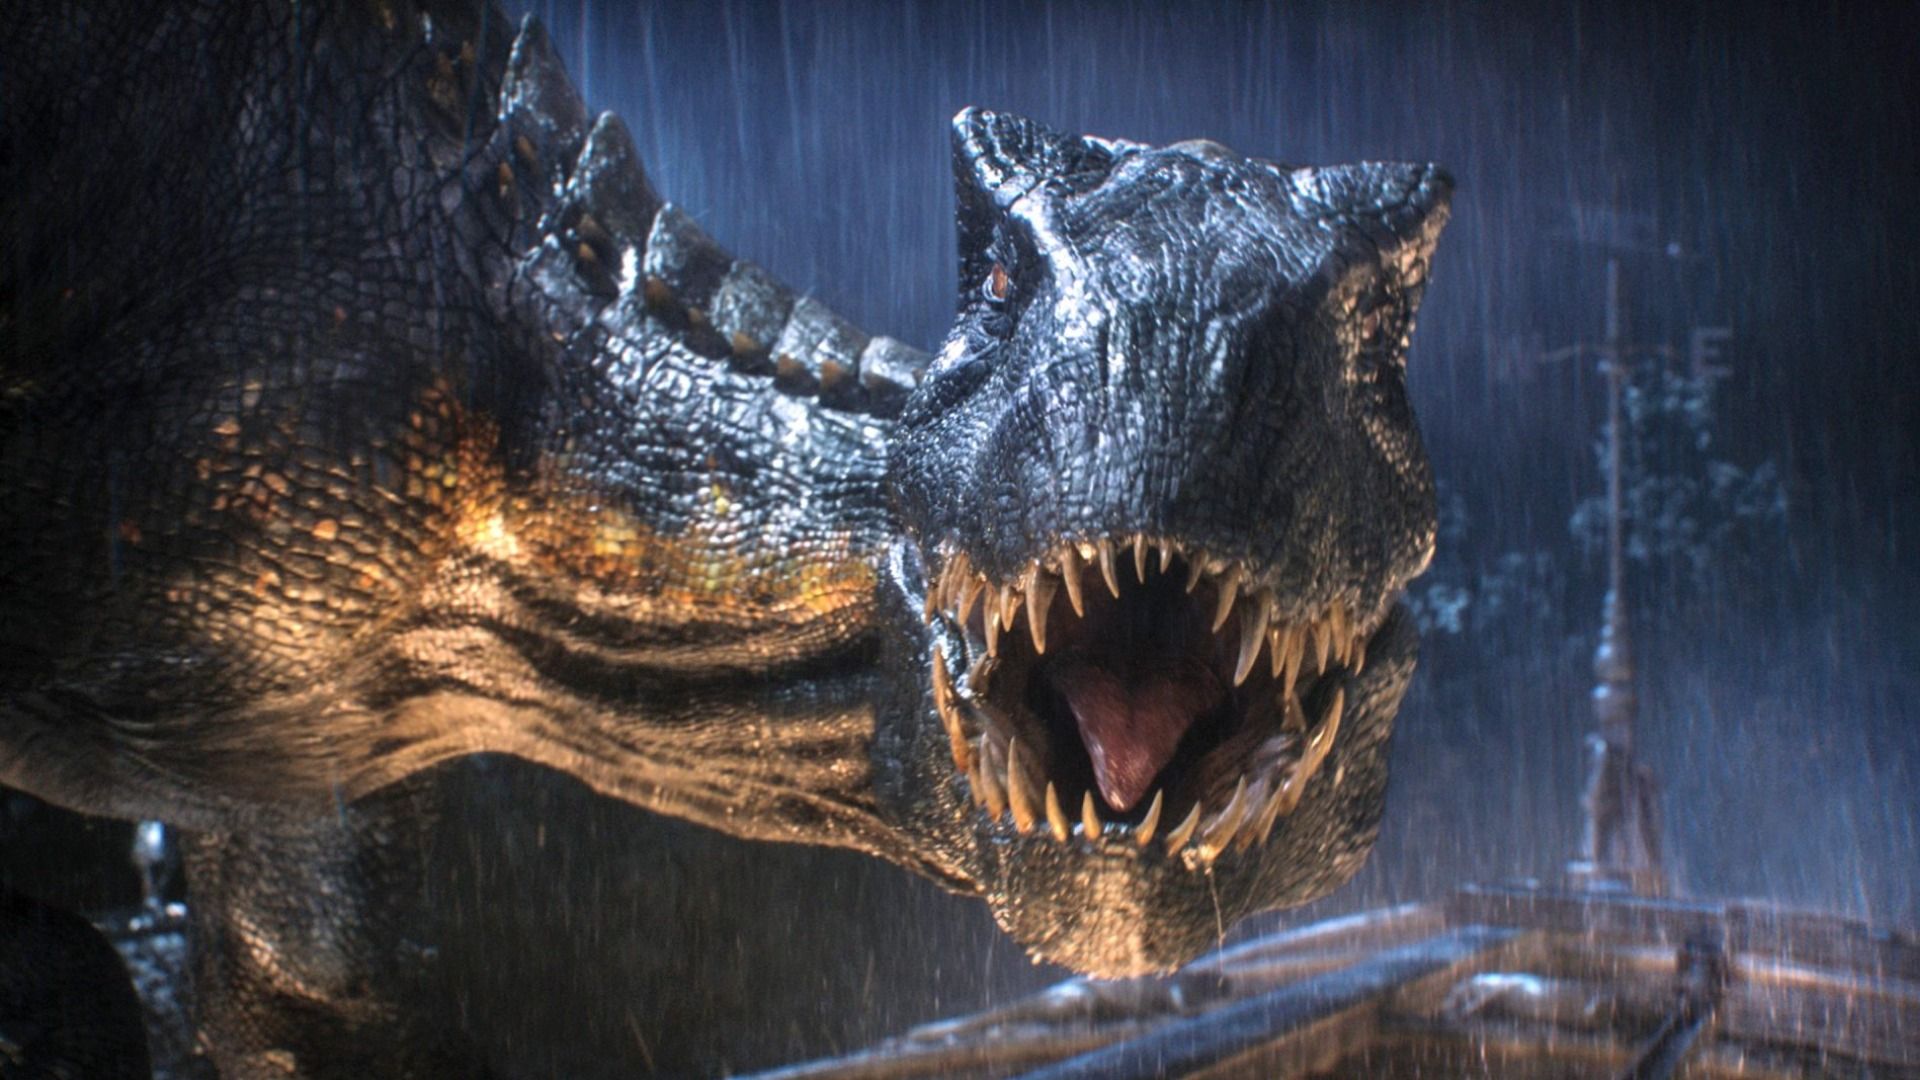 Jurassic World 3: Dominion: release date, cast, plot, trailer, and more